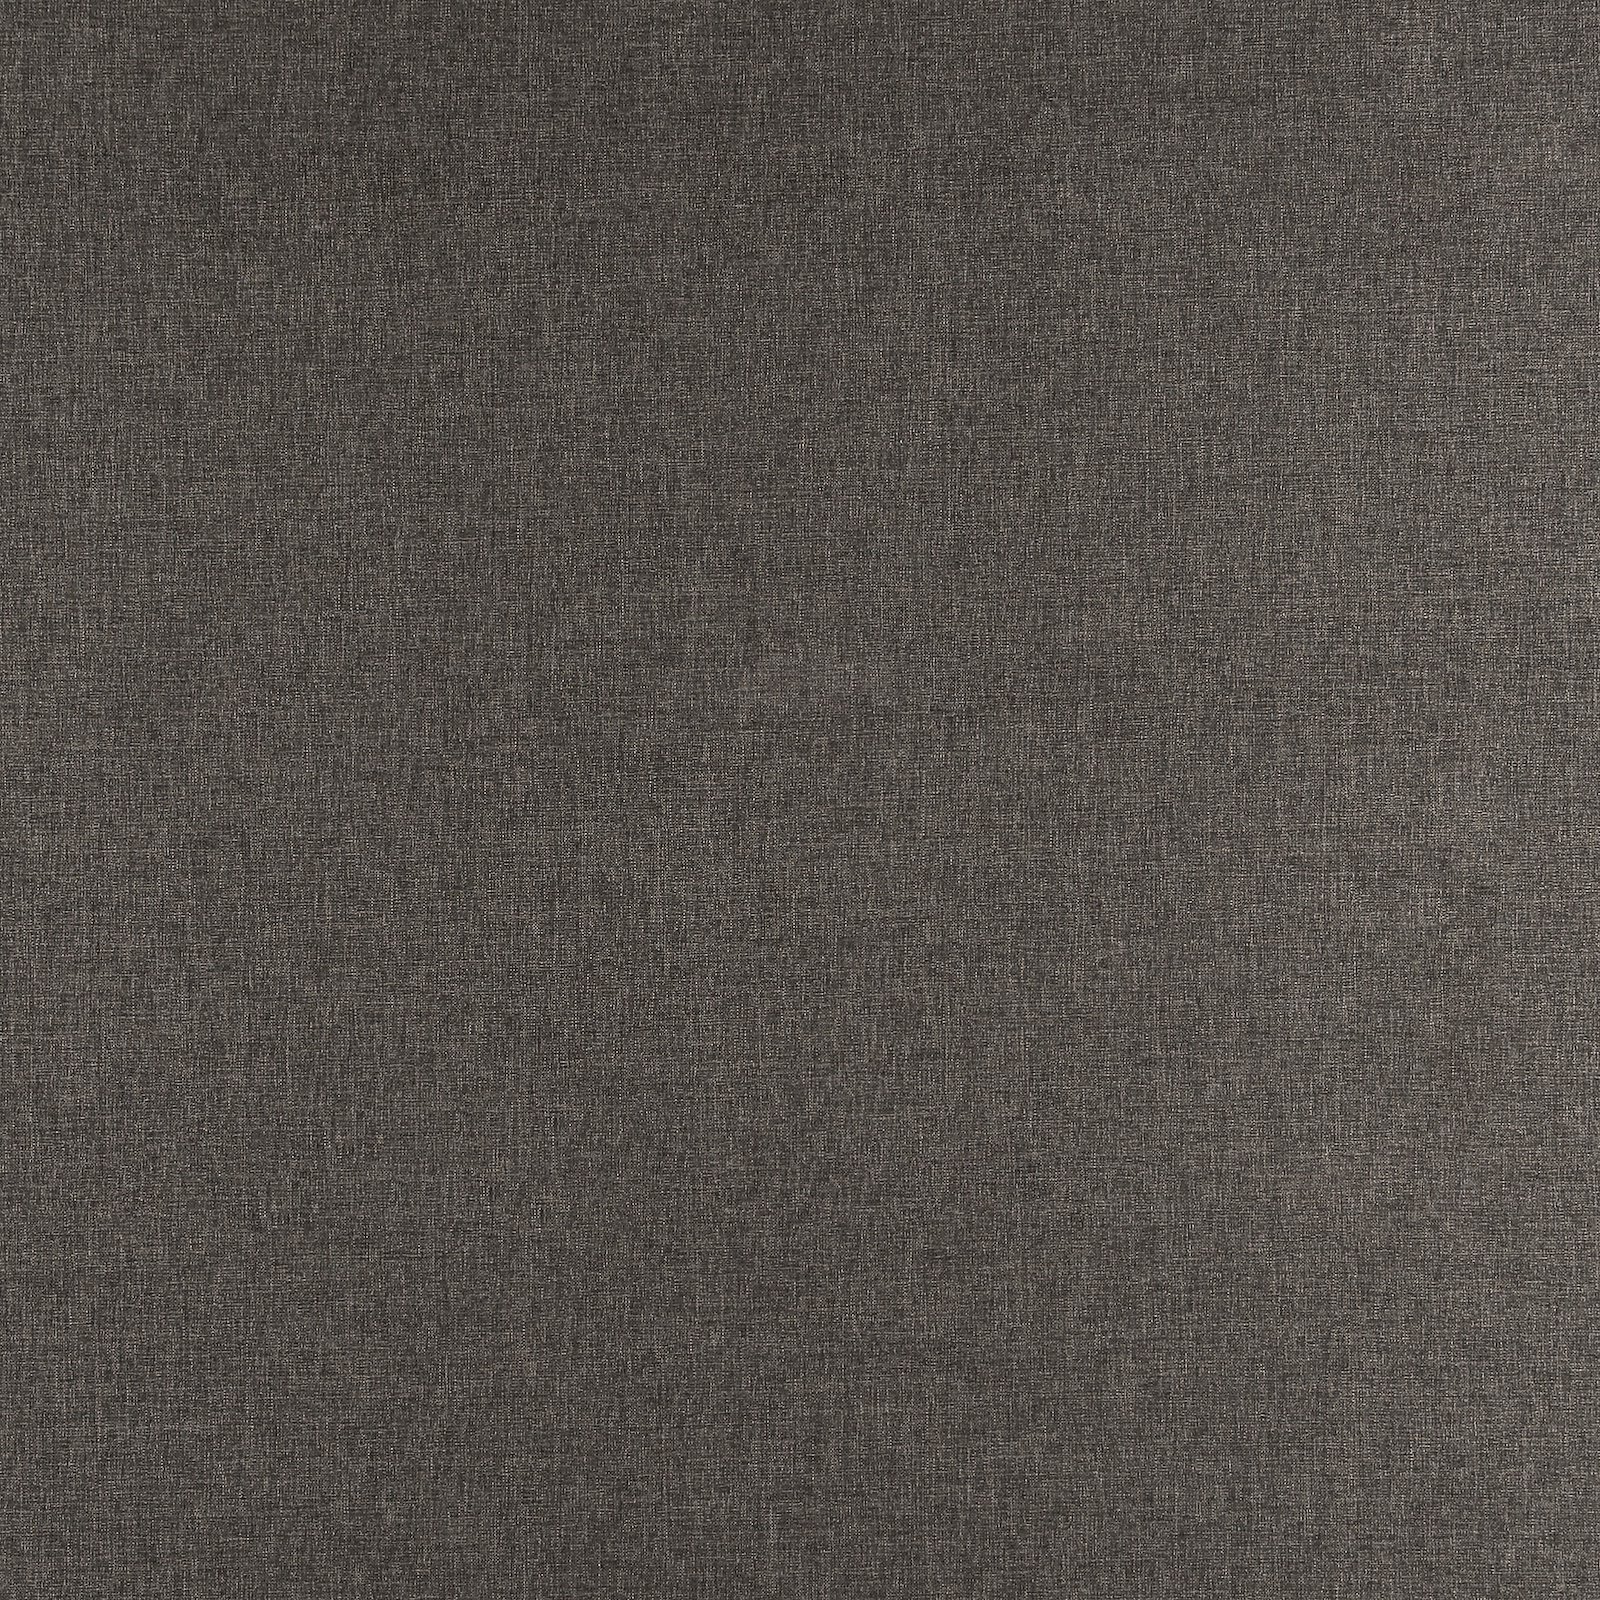 Møbelstruktur mørk grå/sort 822161_pack_solid